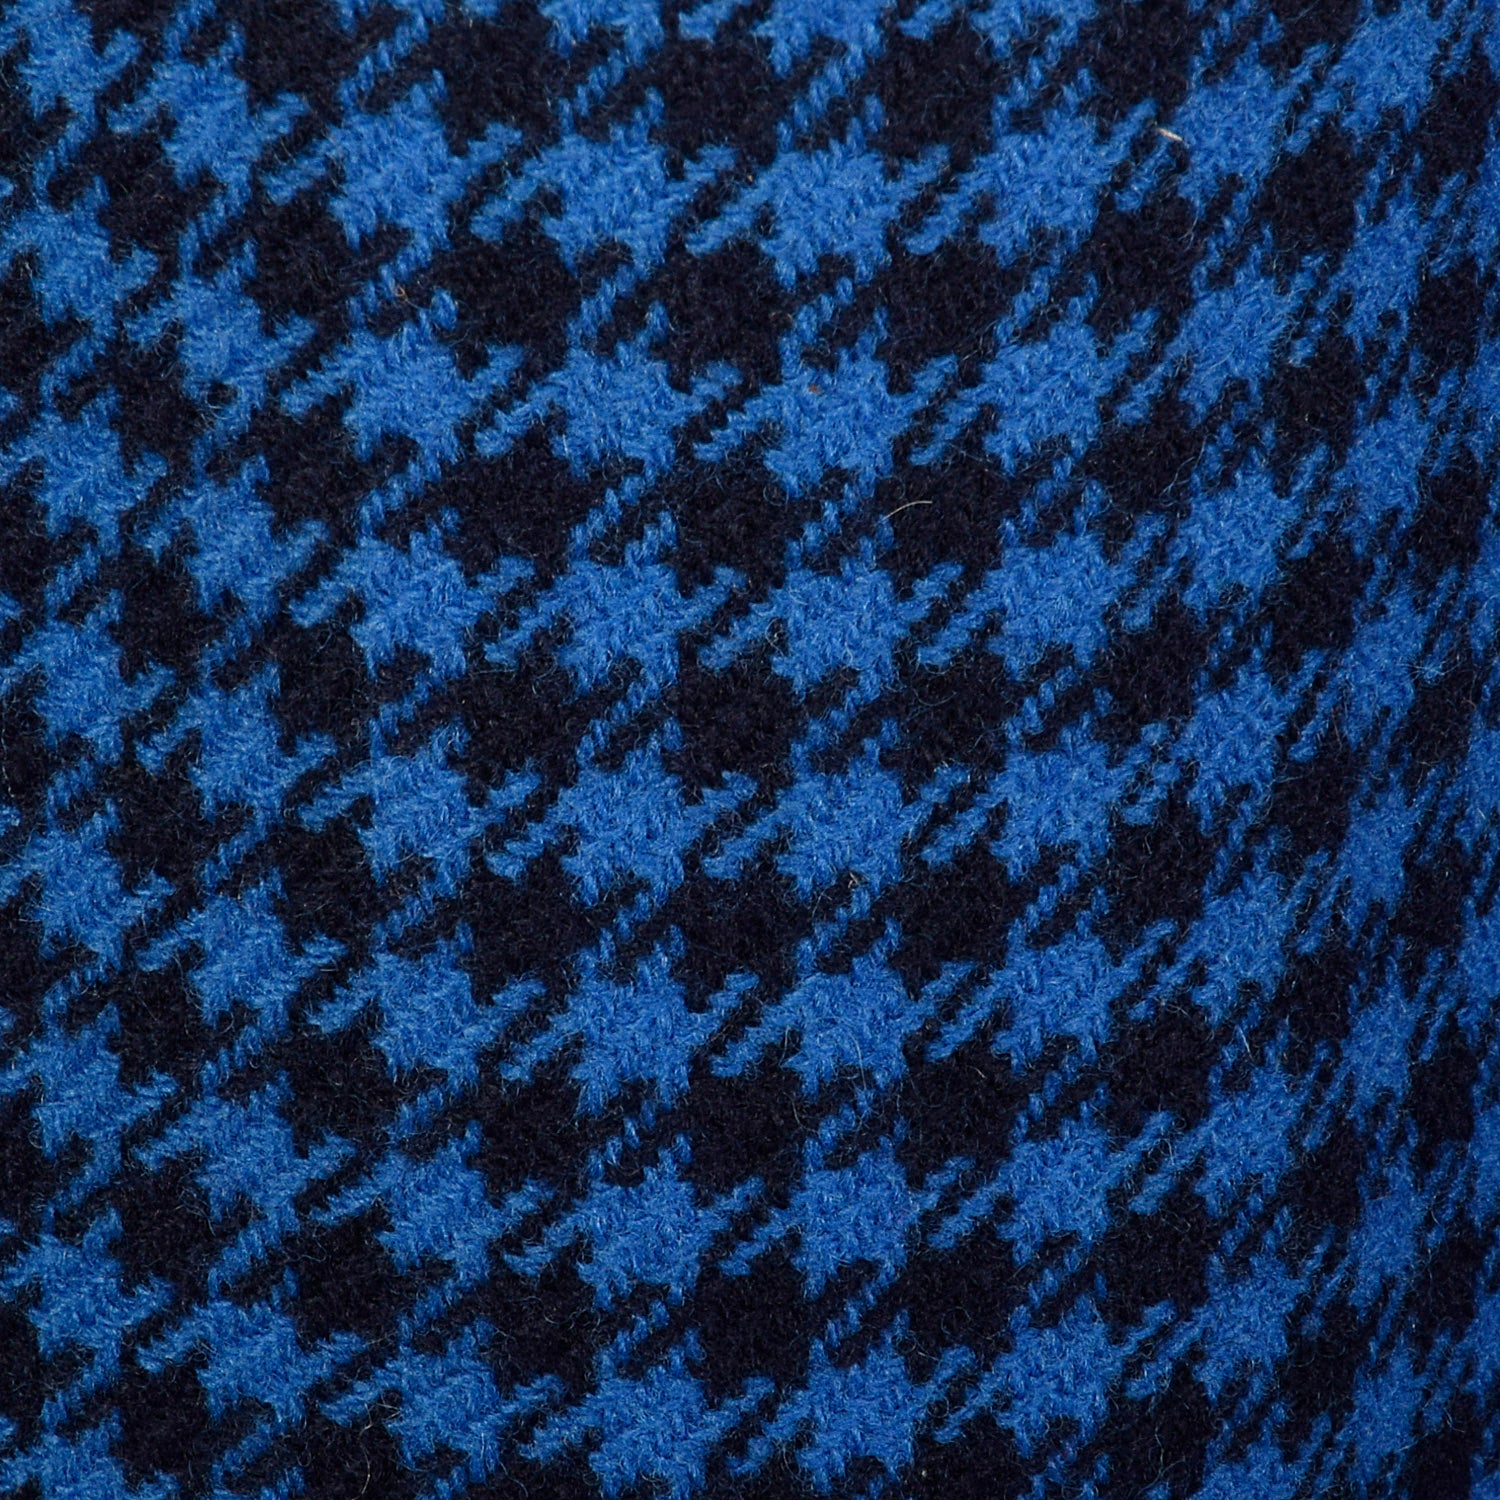 Medium Valentino Boutique 1980s Blue Houndstooth Plaid Skirt Suit